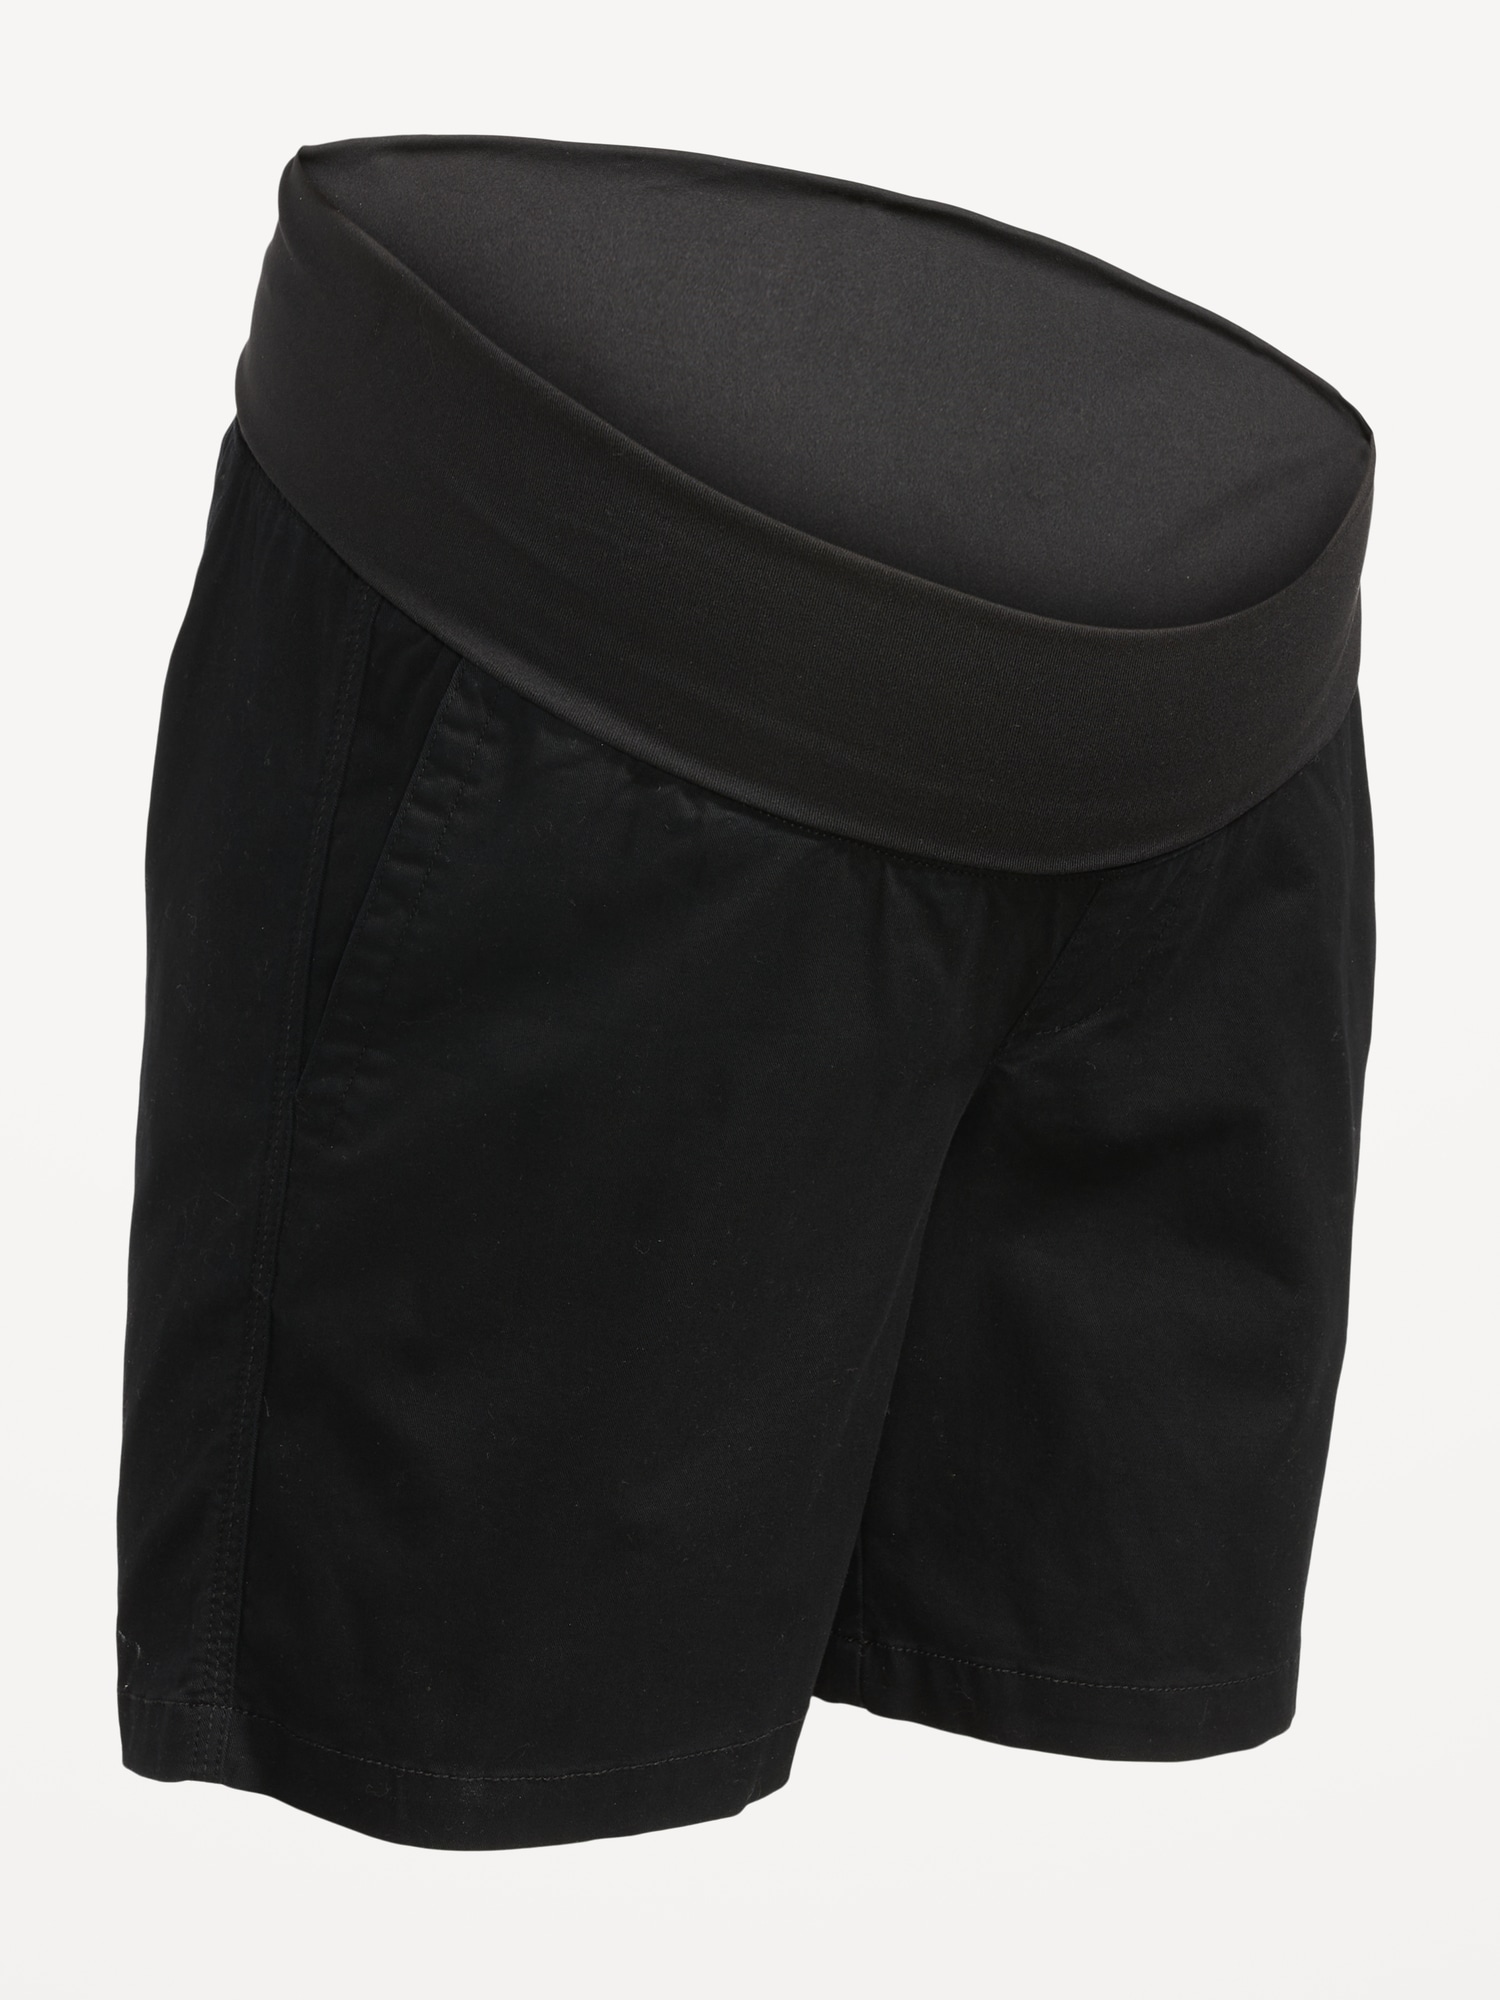 Maternity Rollover-Waist OGC Chino Shorts -- 5-inch inseam